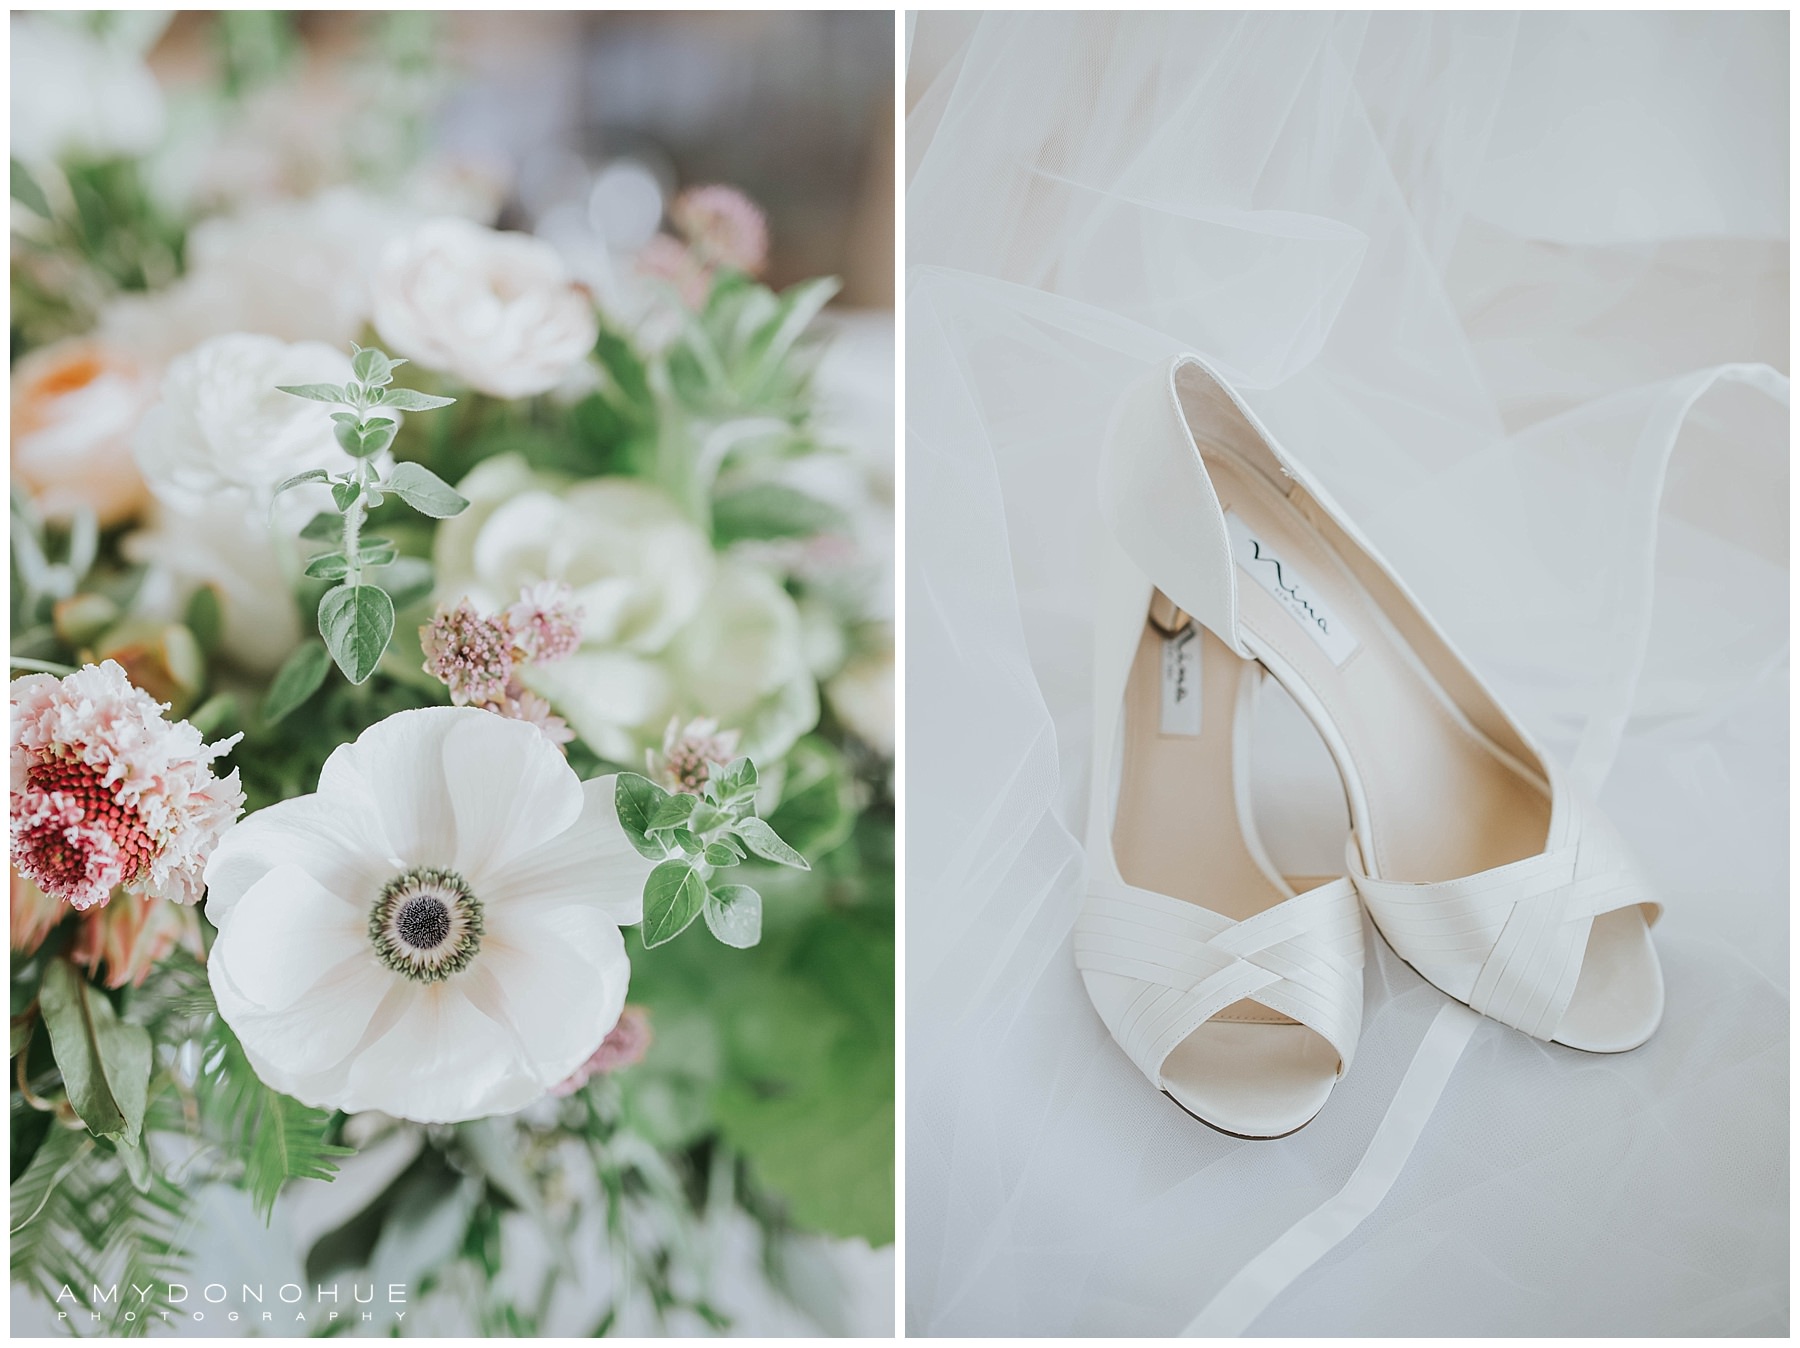 Bridal Details | Basin Harbor Wedding Photographer | © Amy Donohue Photography